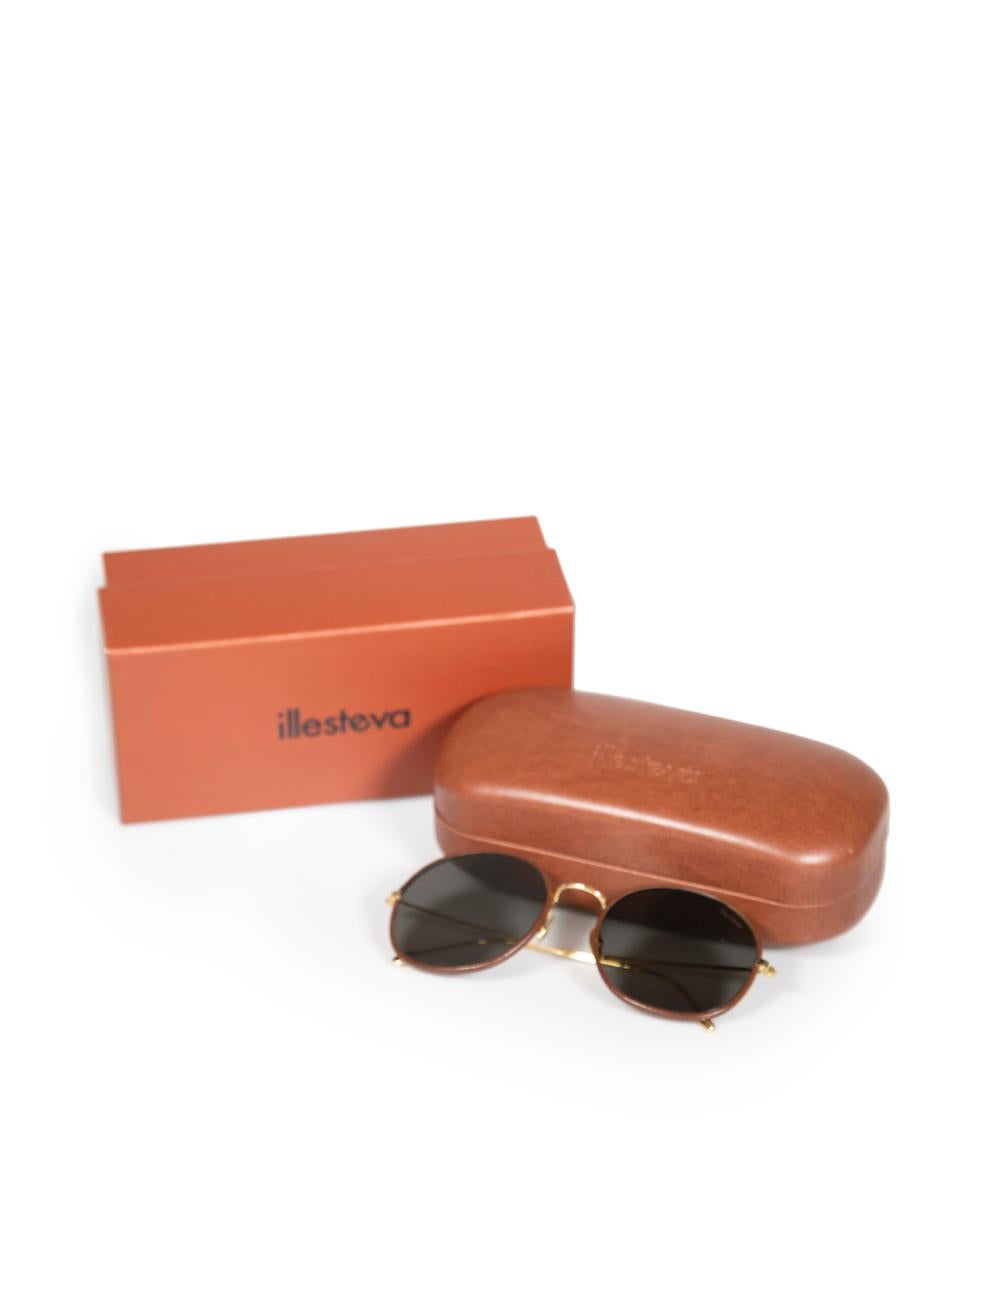 Illesteva Brown Alina Leather C2 Round Sunglasses For Sale 1